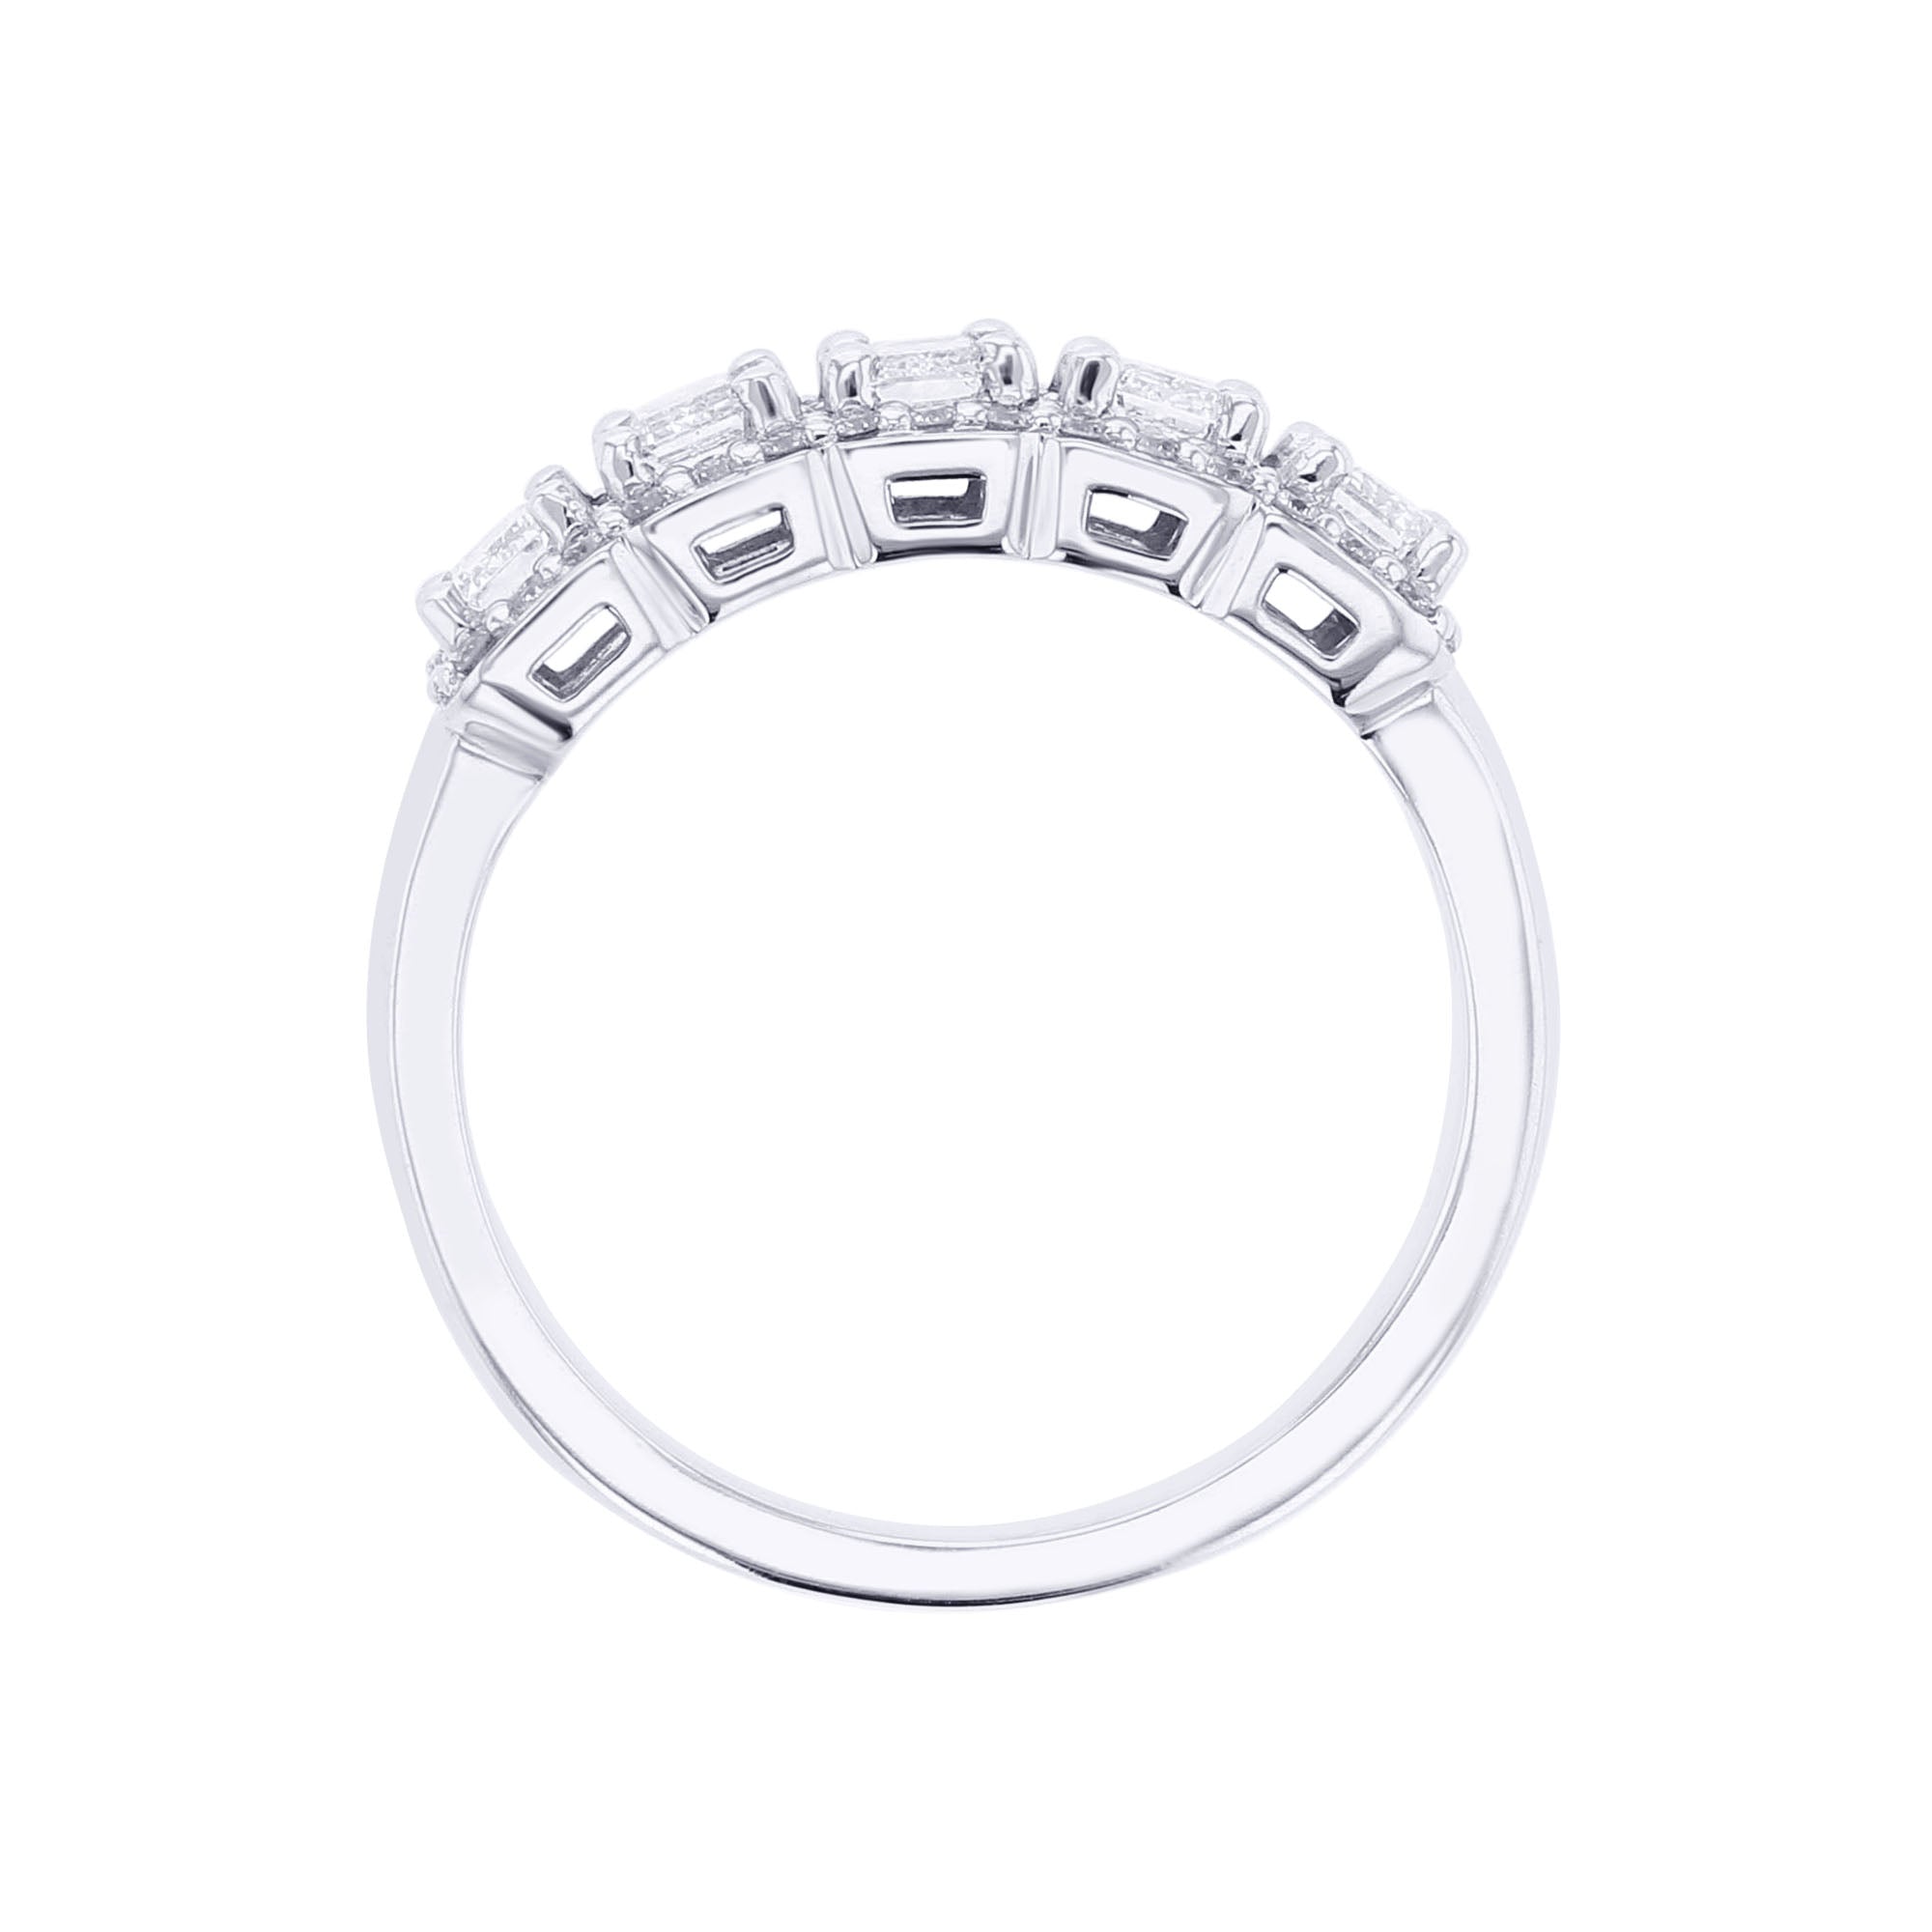 Lovella 5 Stone Halo Diamond Ring 1ct